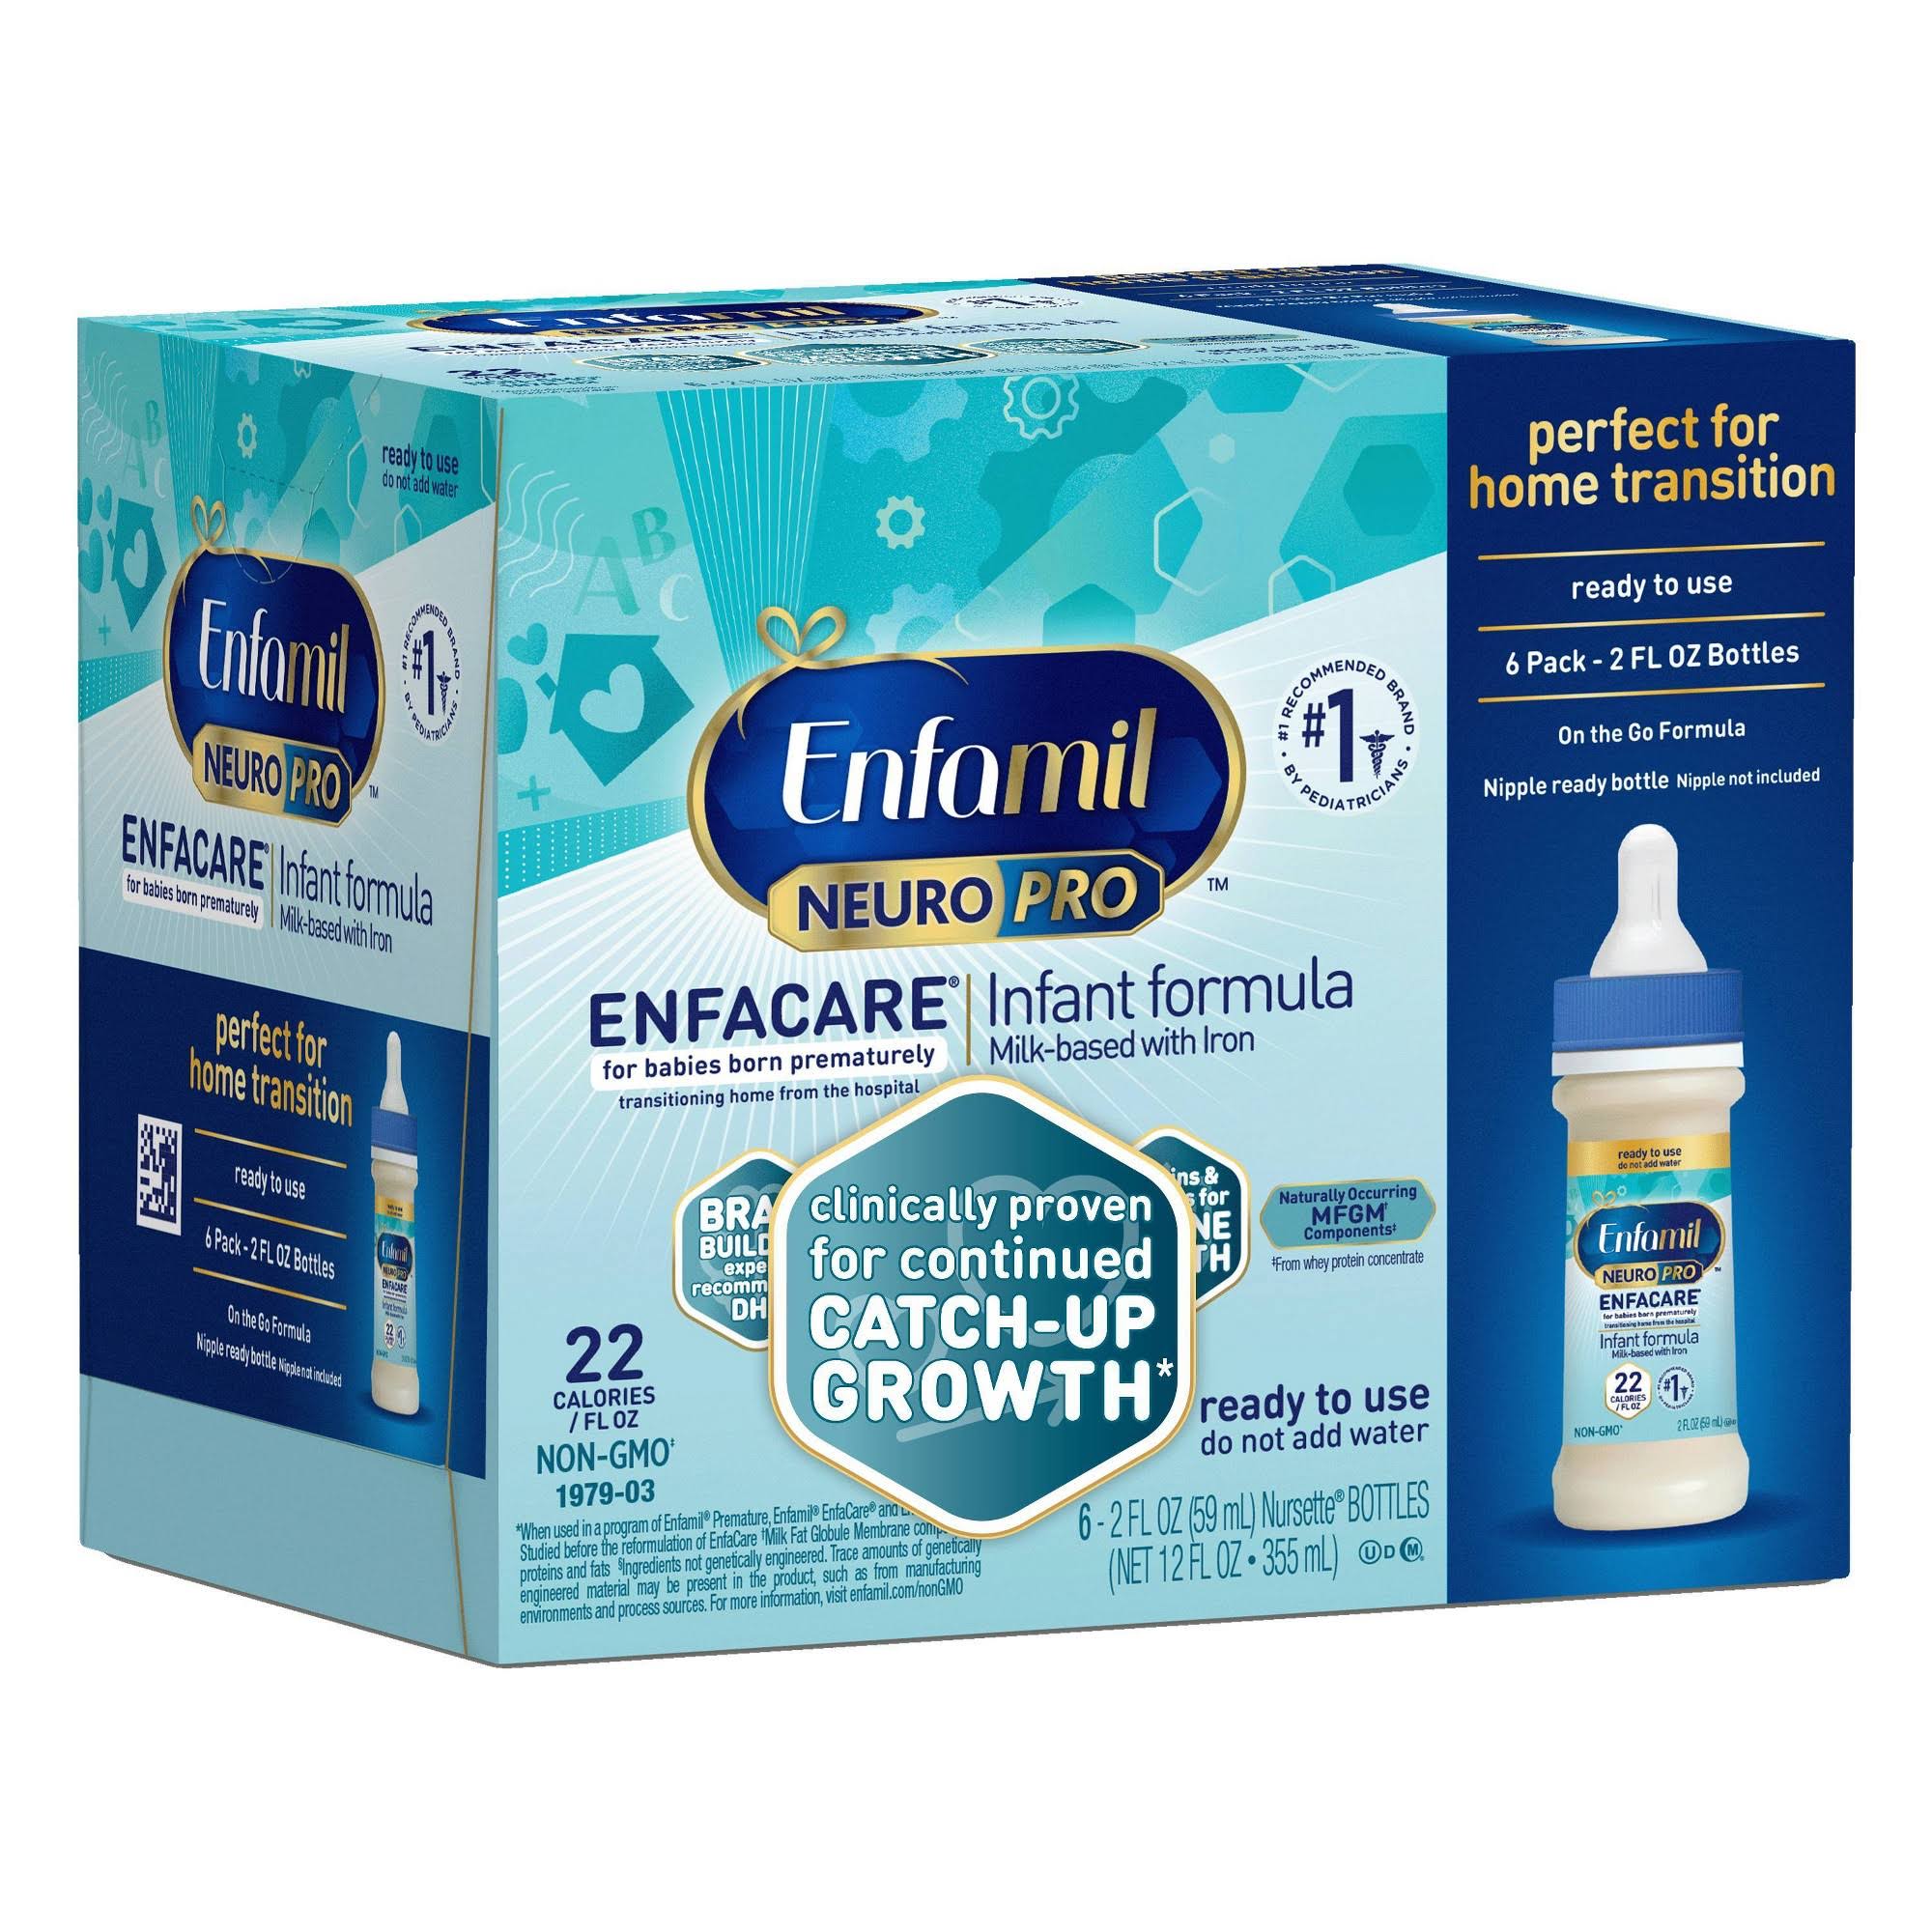 Enfamil NeuroPro EnfaCare Infant Formula, Ready to Use - 6 pack, 2 fl oz bottles